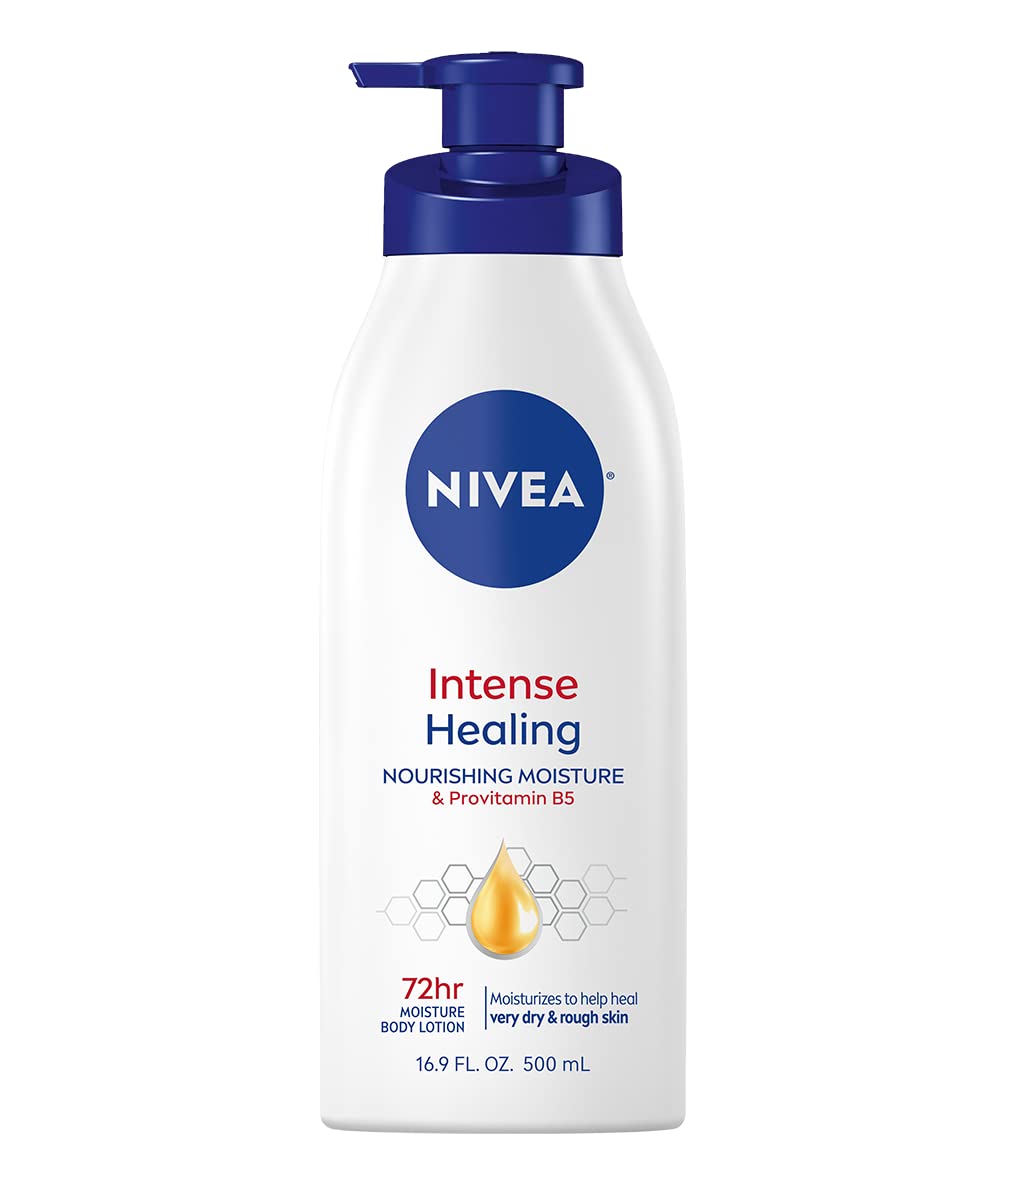 NIVEA Intense Healing Body Lotion